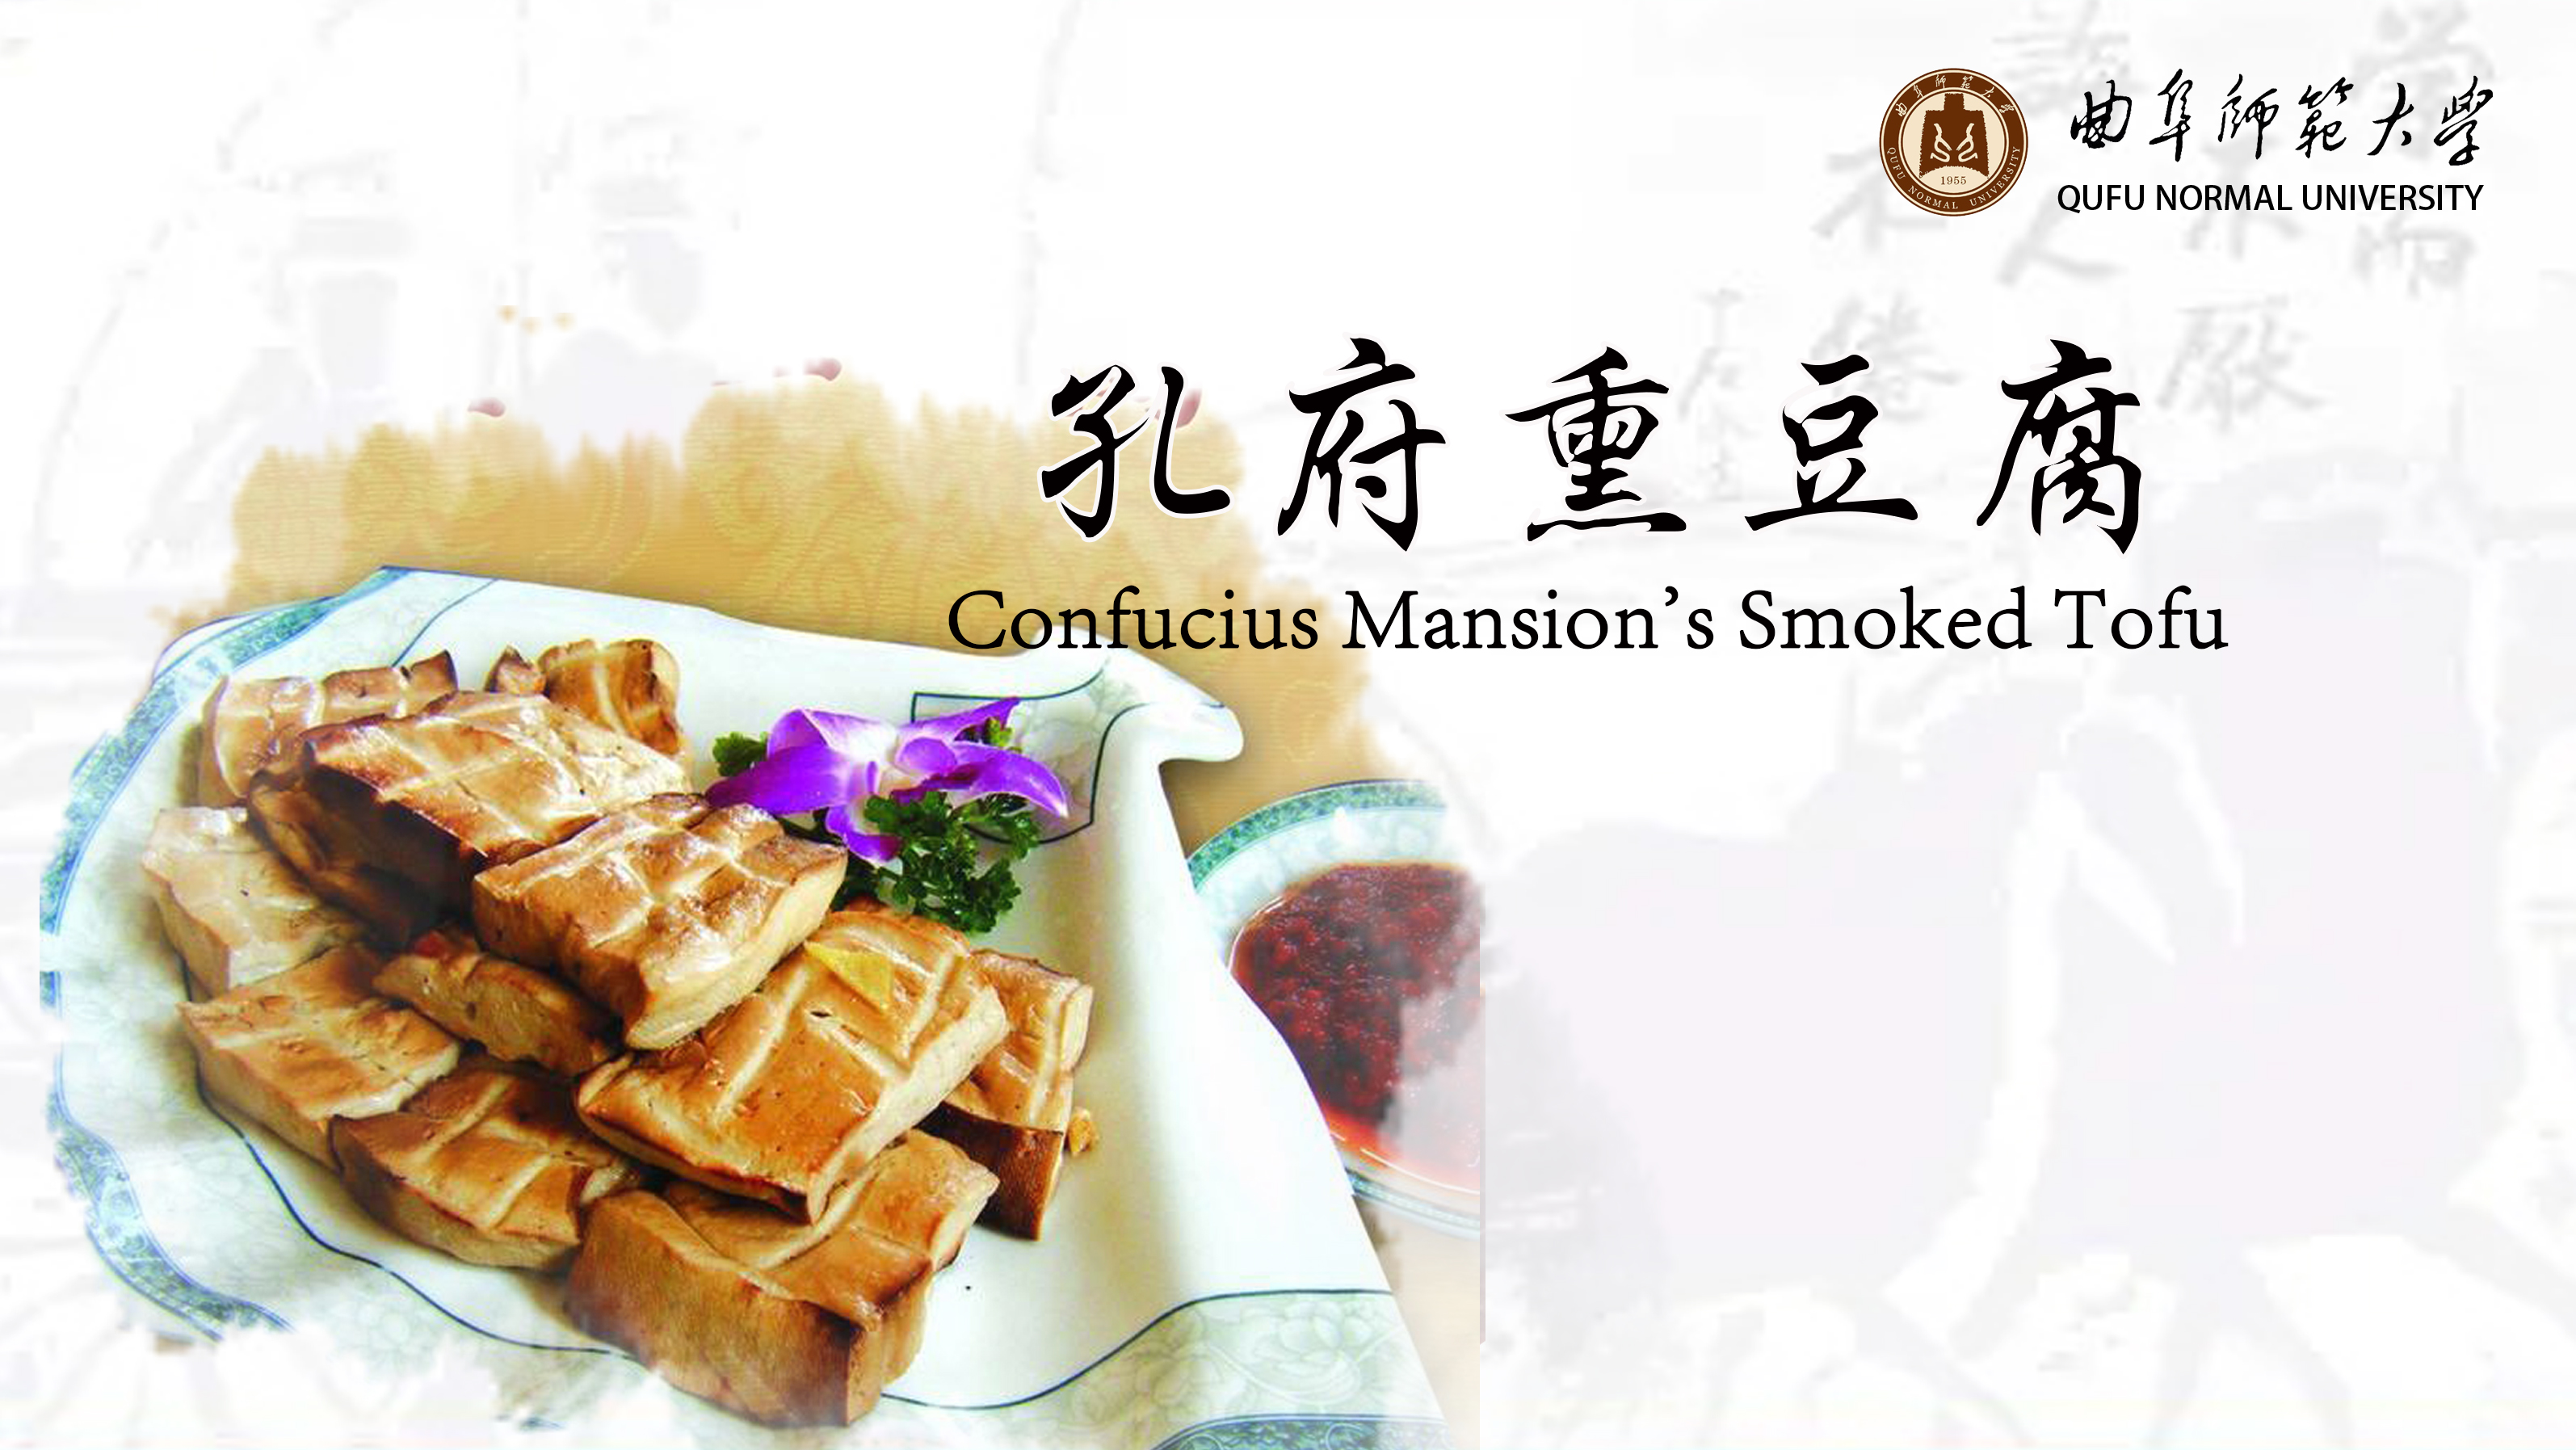 Confucius Mansion’s Smoked Tofu